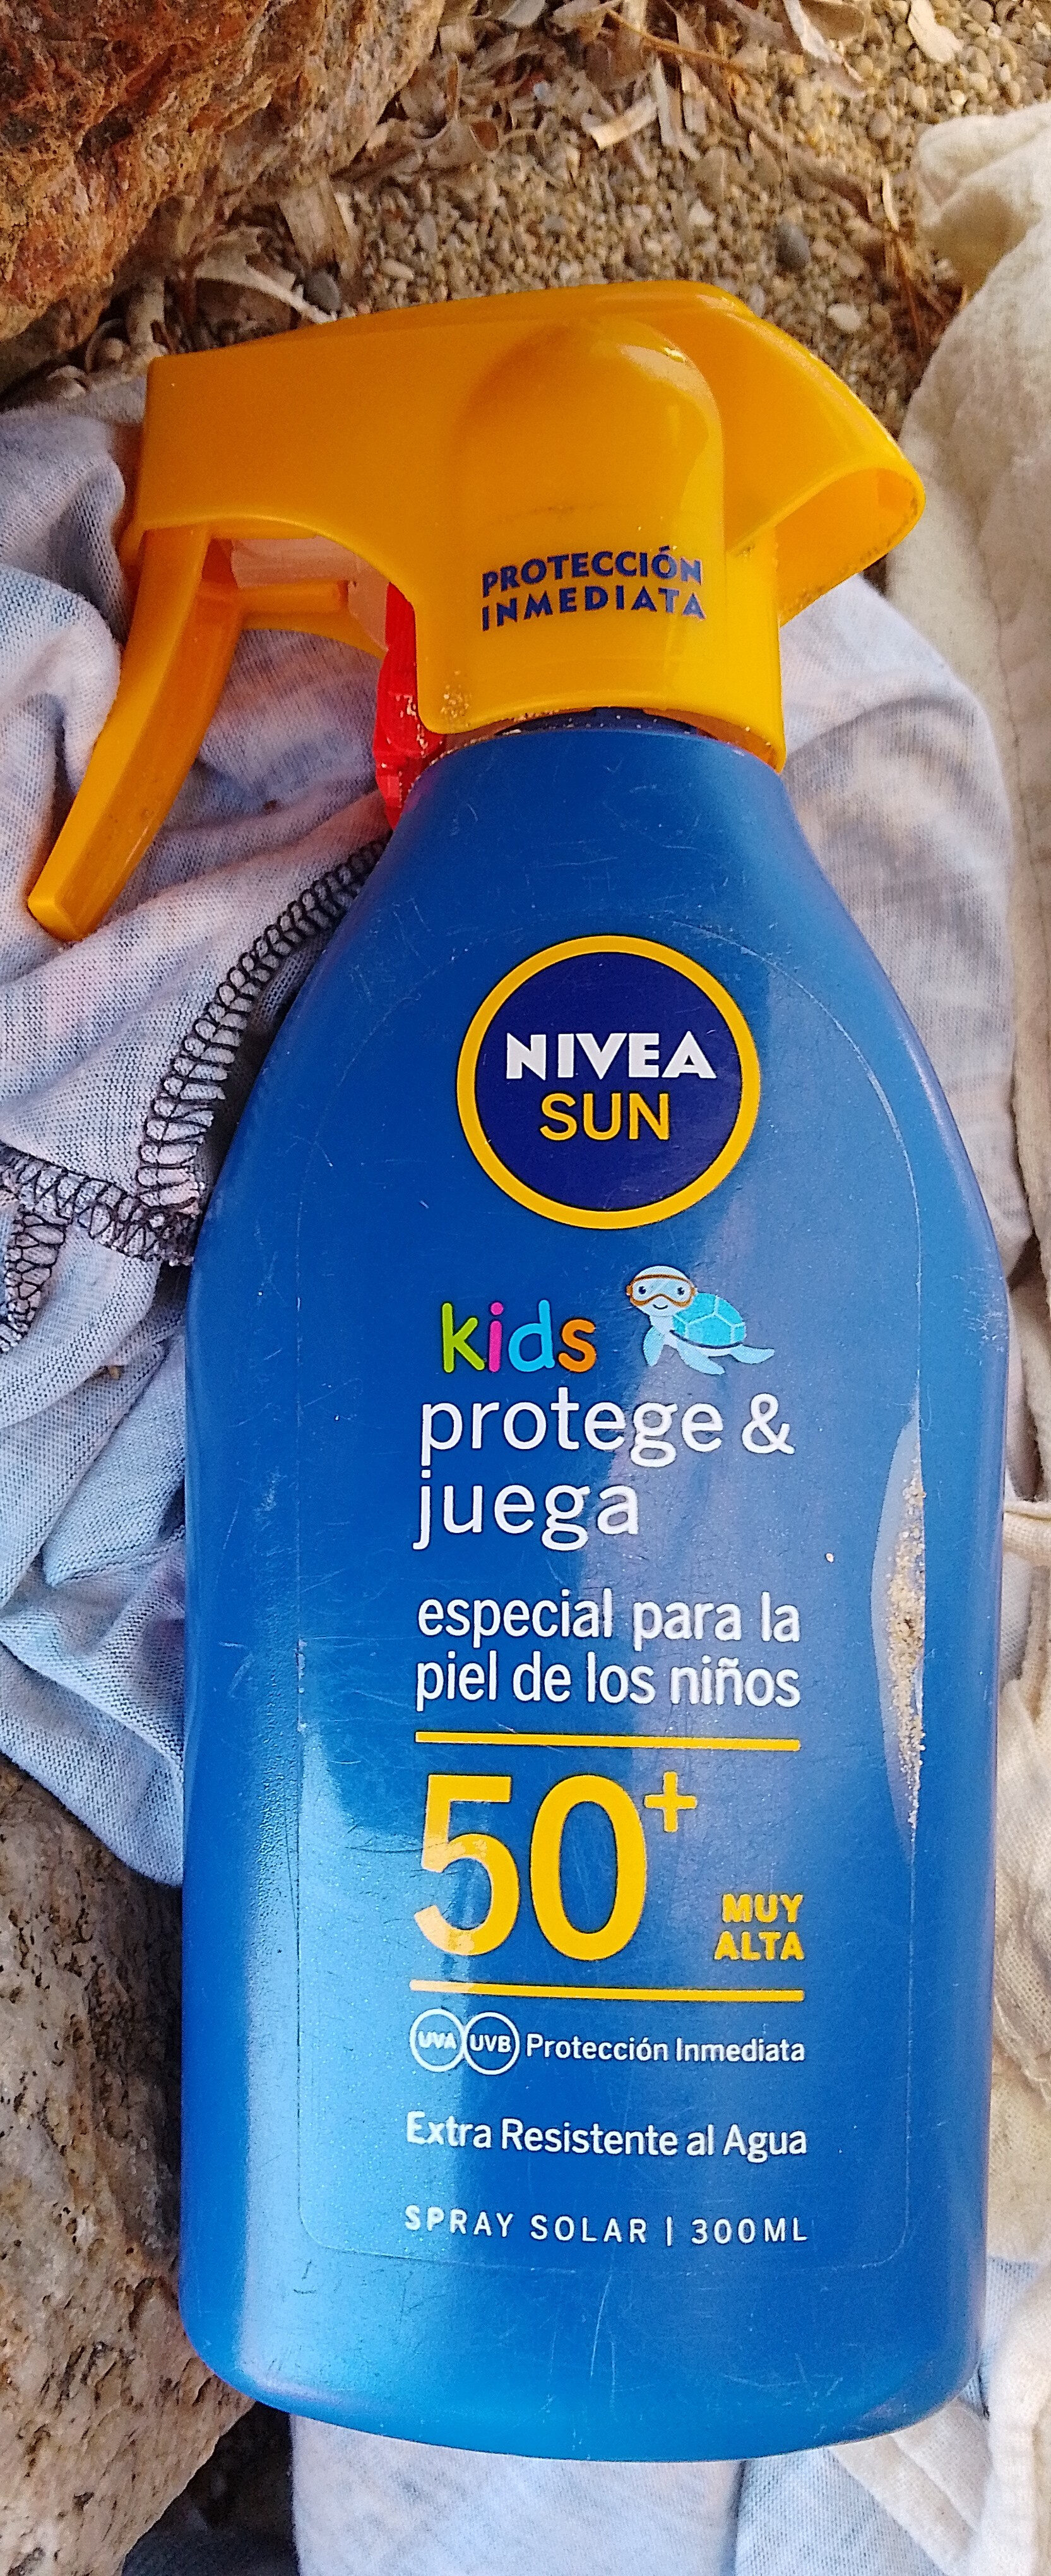 Nivea Sun kids 50+ - Product - es